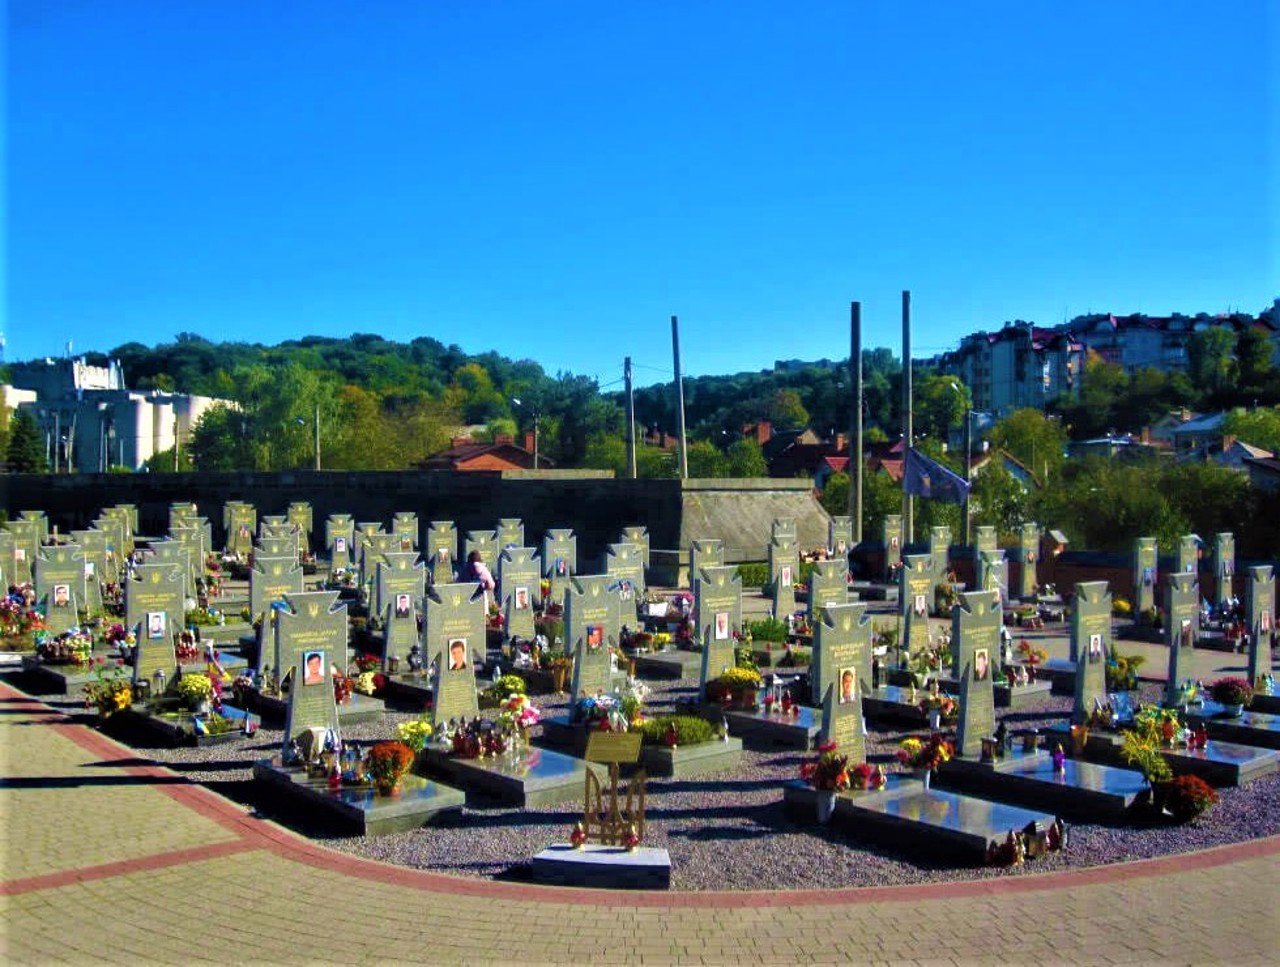 Lychakiv cemetery, Lviv